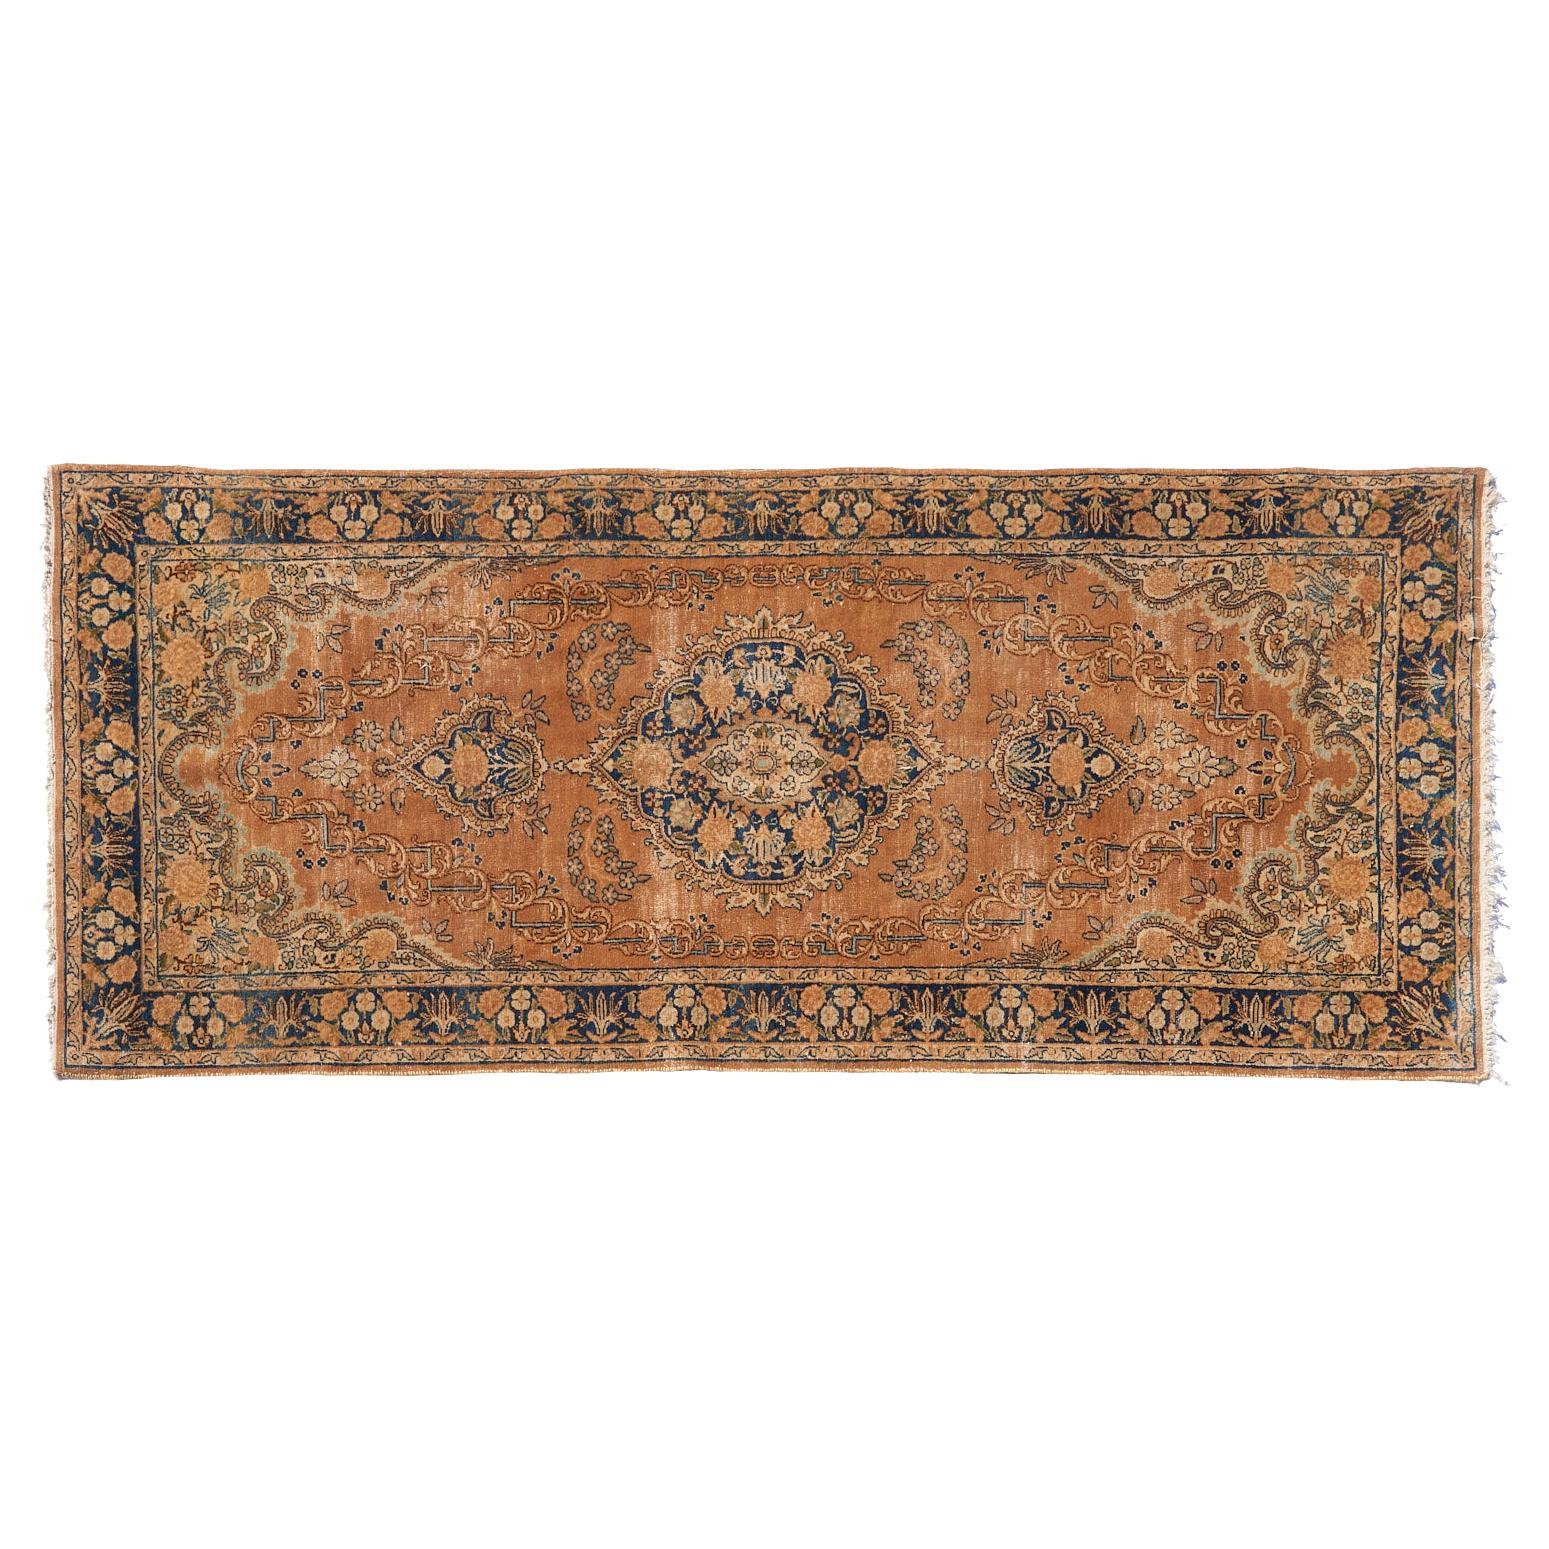 Antique Tabriz-Style Rug in Natural Tones For Sale